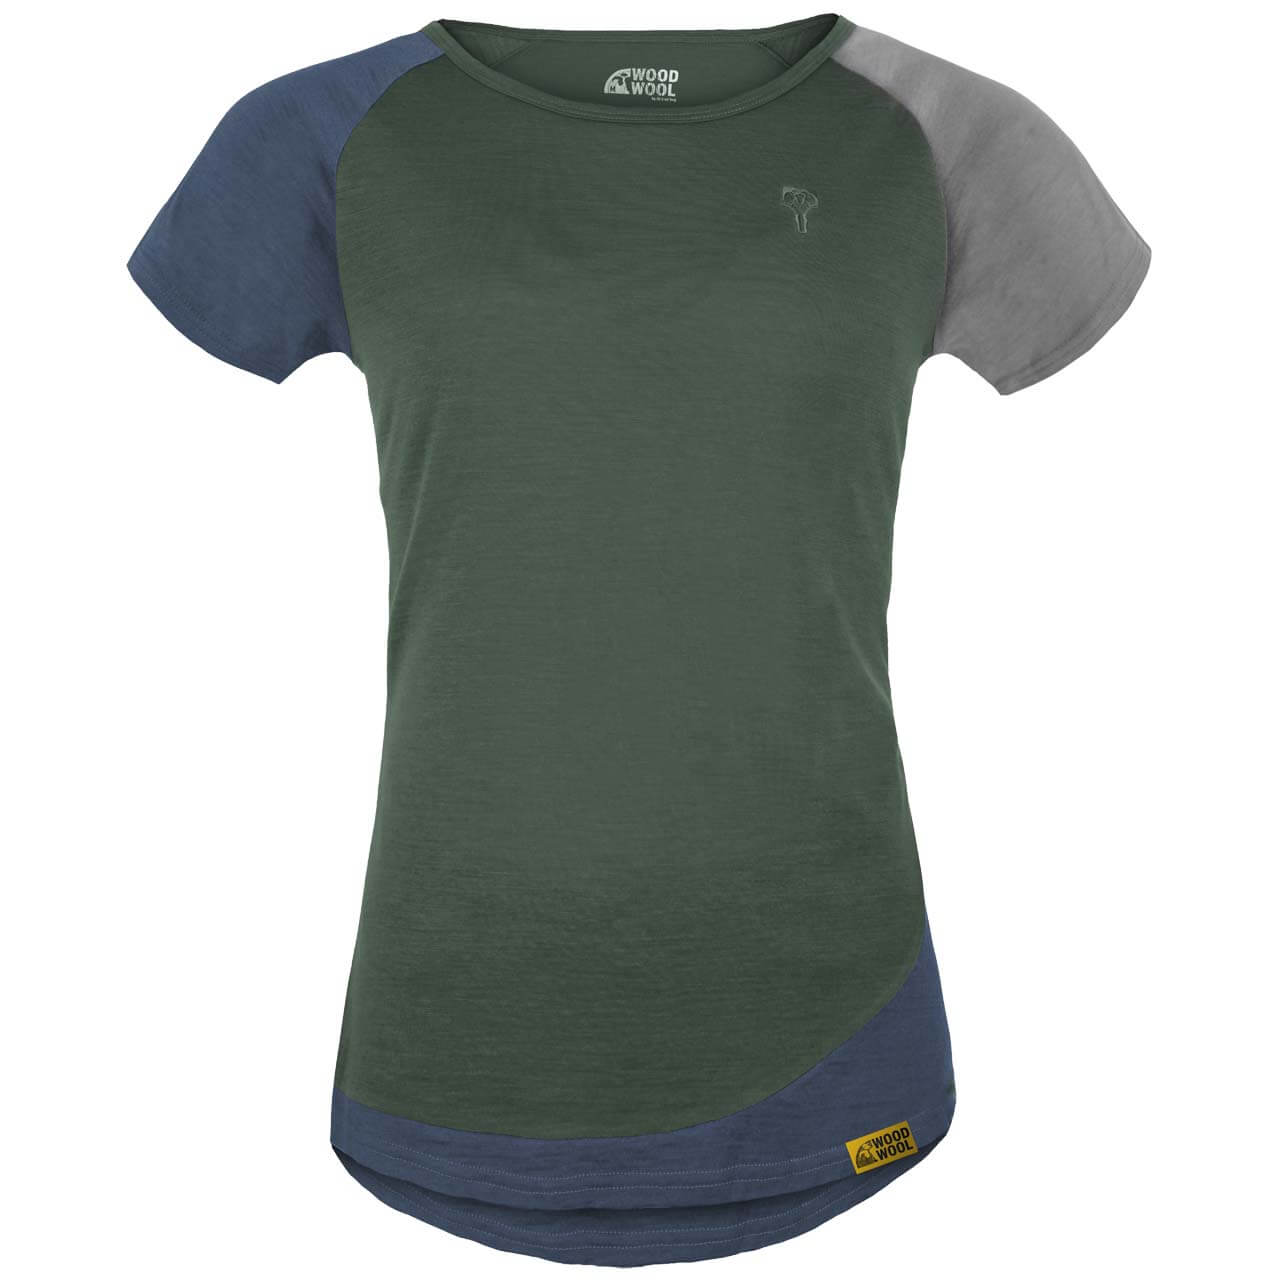 Grüezi Bag WoodWool Janeway T-Shirt - Bayberry Green, M von Grüezi Bag